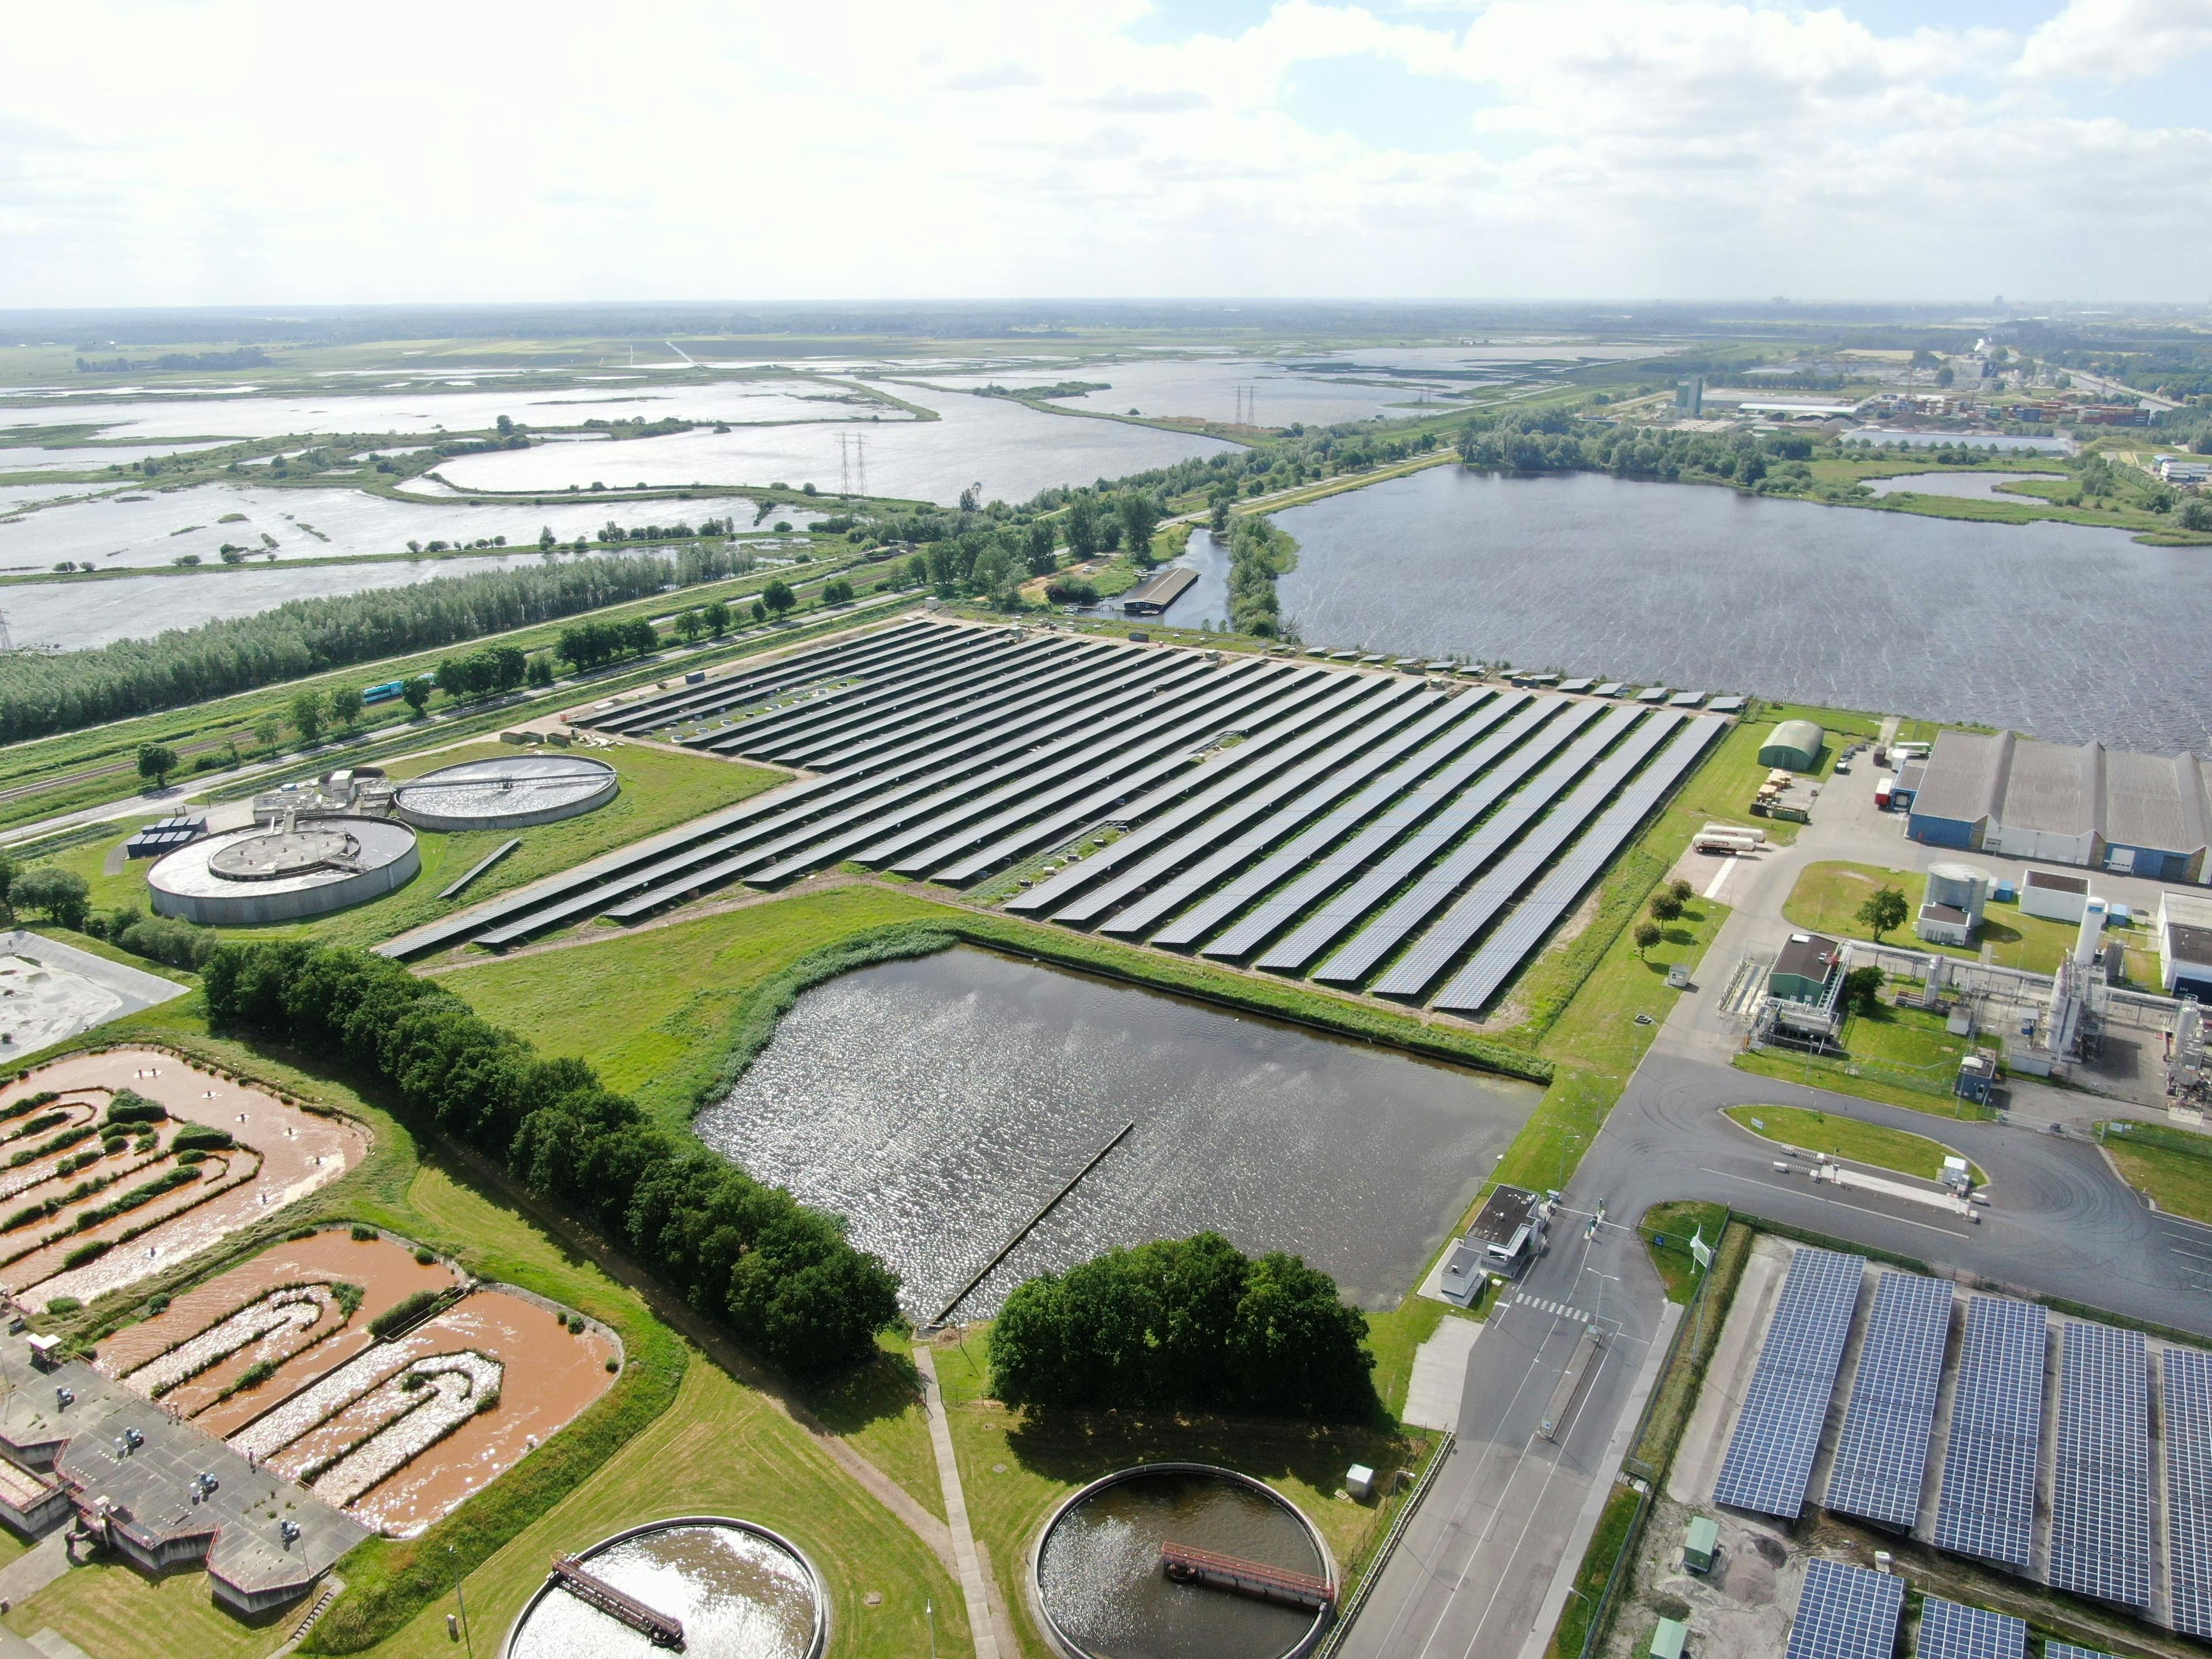 Foxhol freefield project in the Netherlands, taken by drone